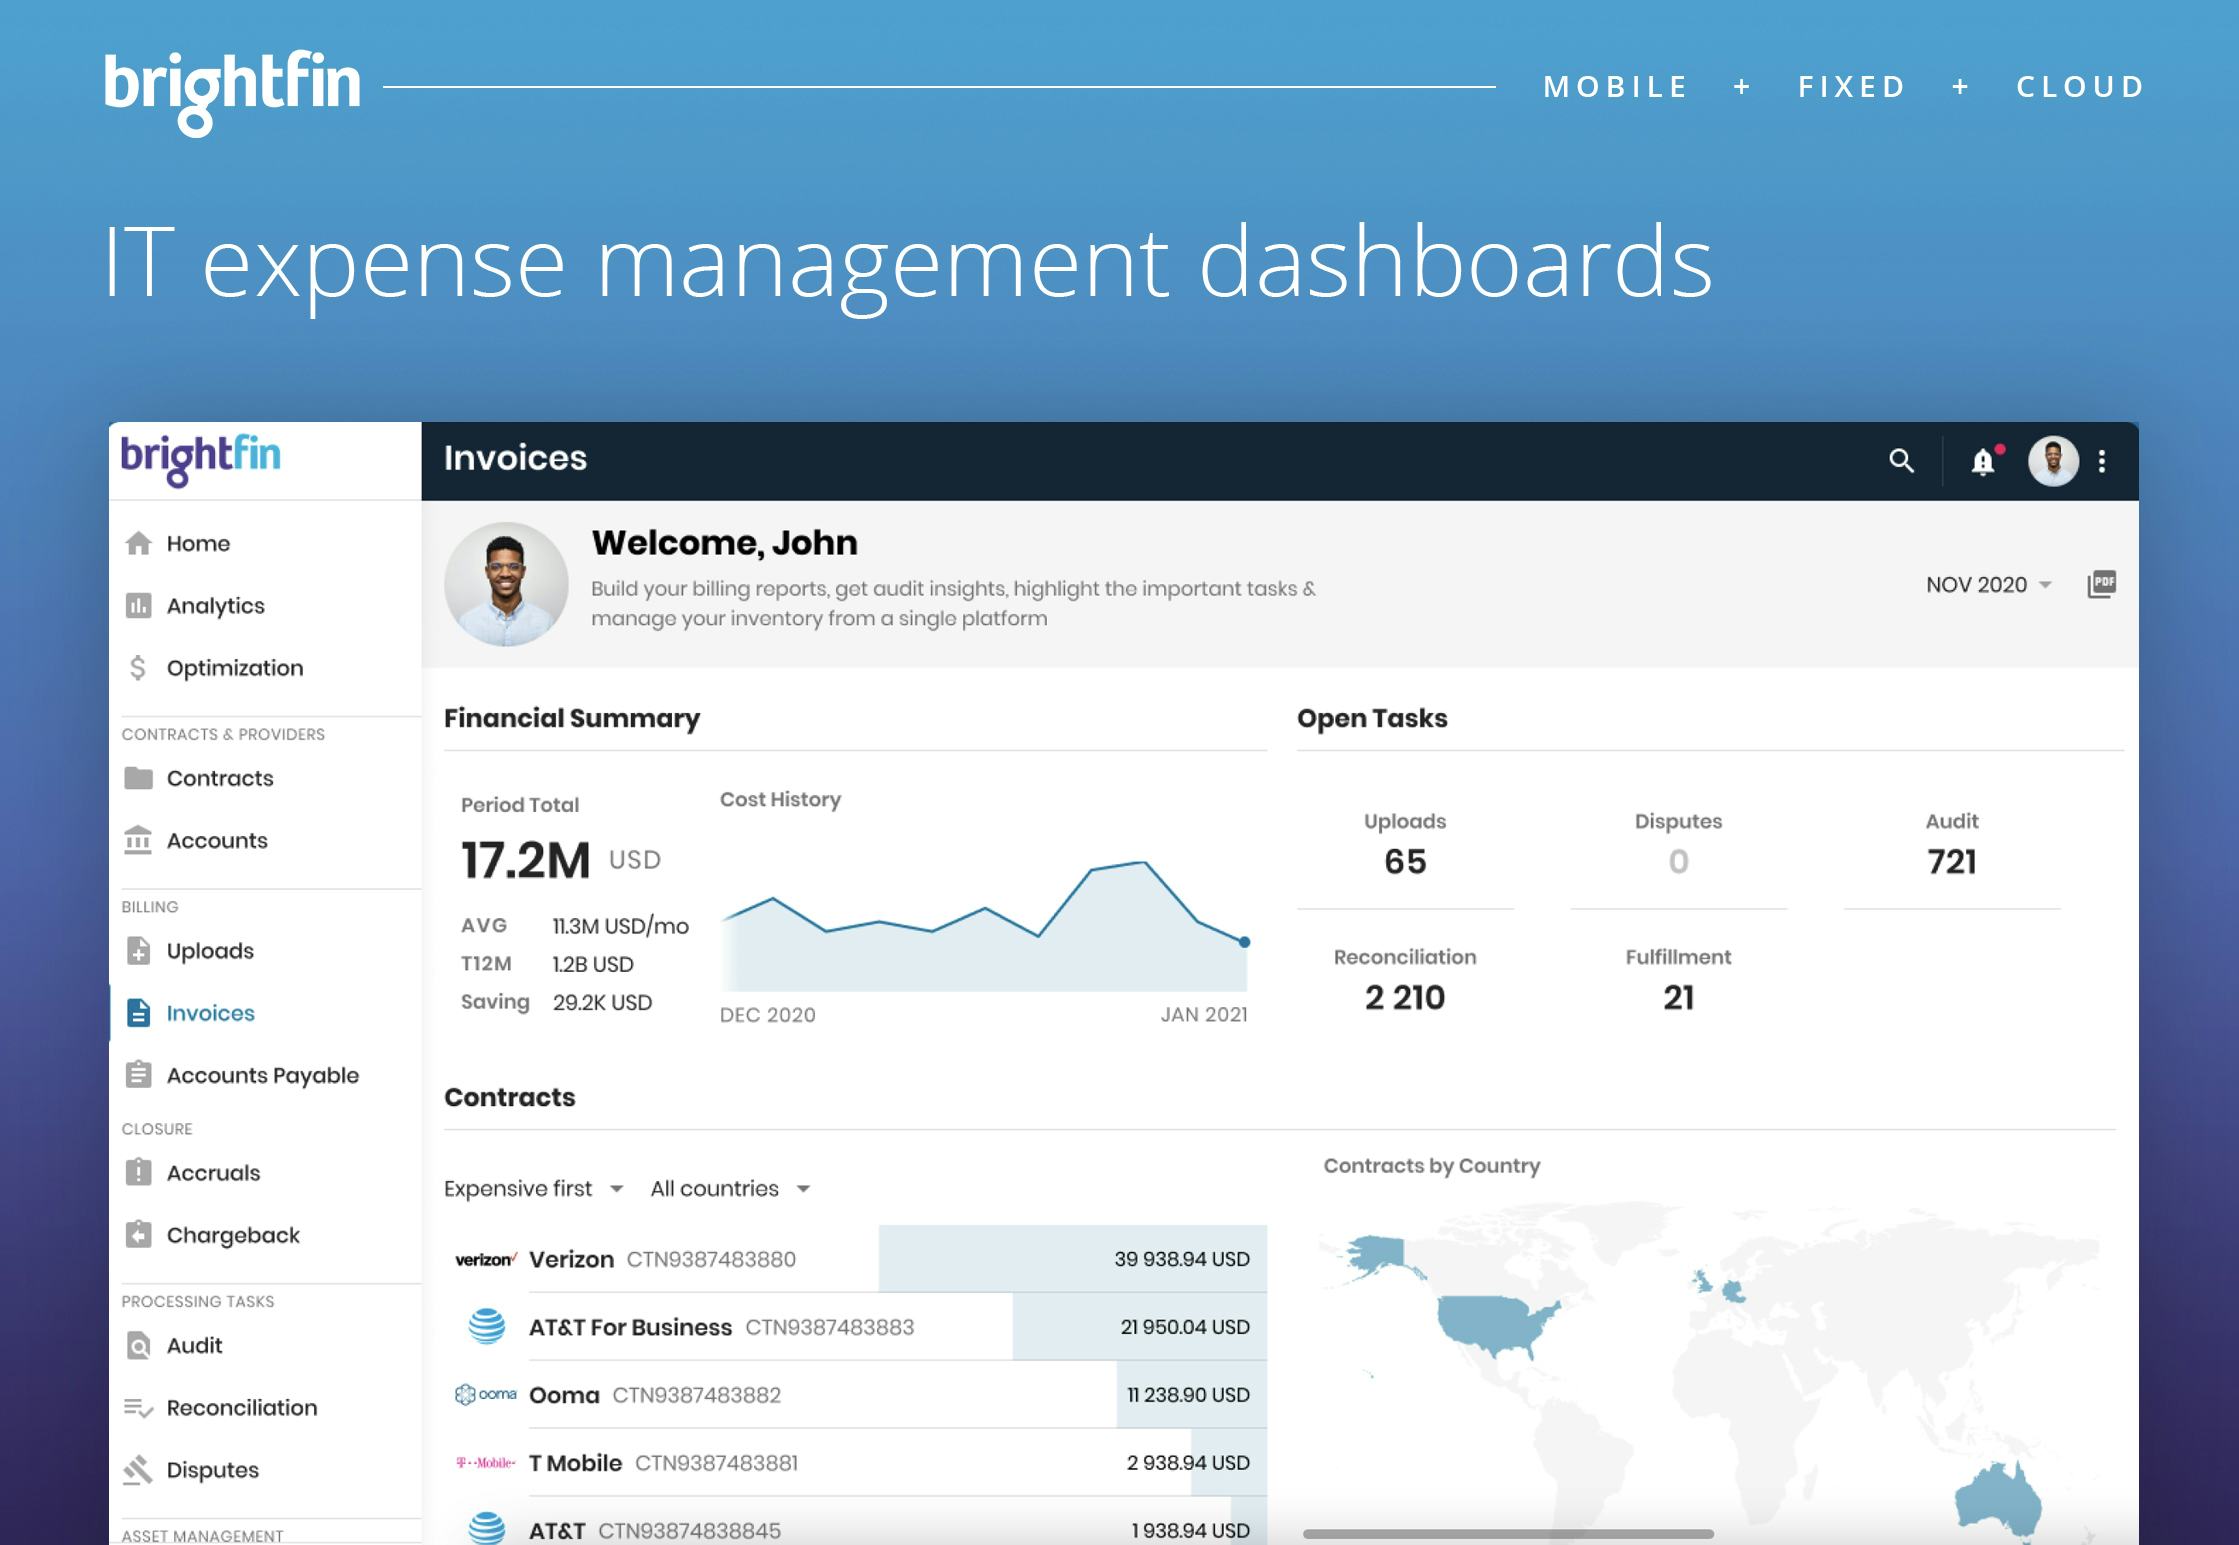 brightfin Software - IT expense management dashboards